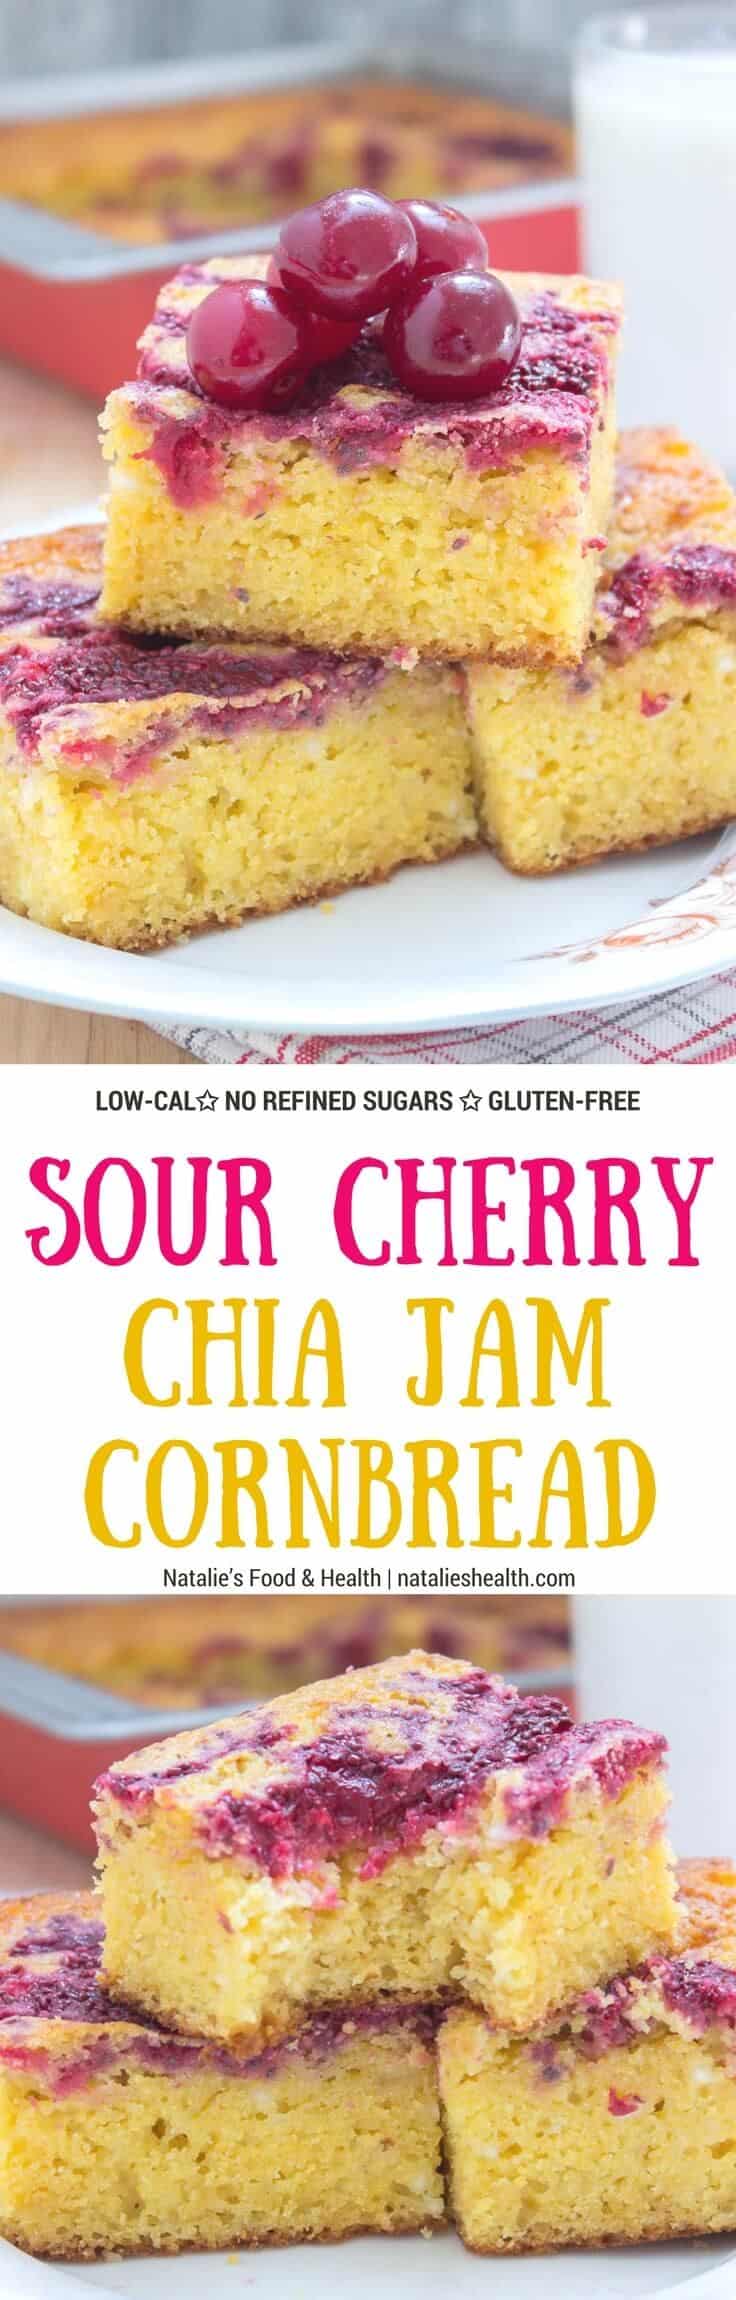 Sour cherry chia jam cornbread